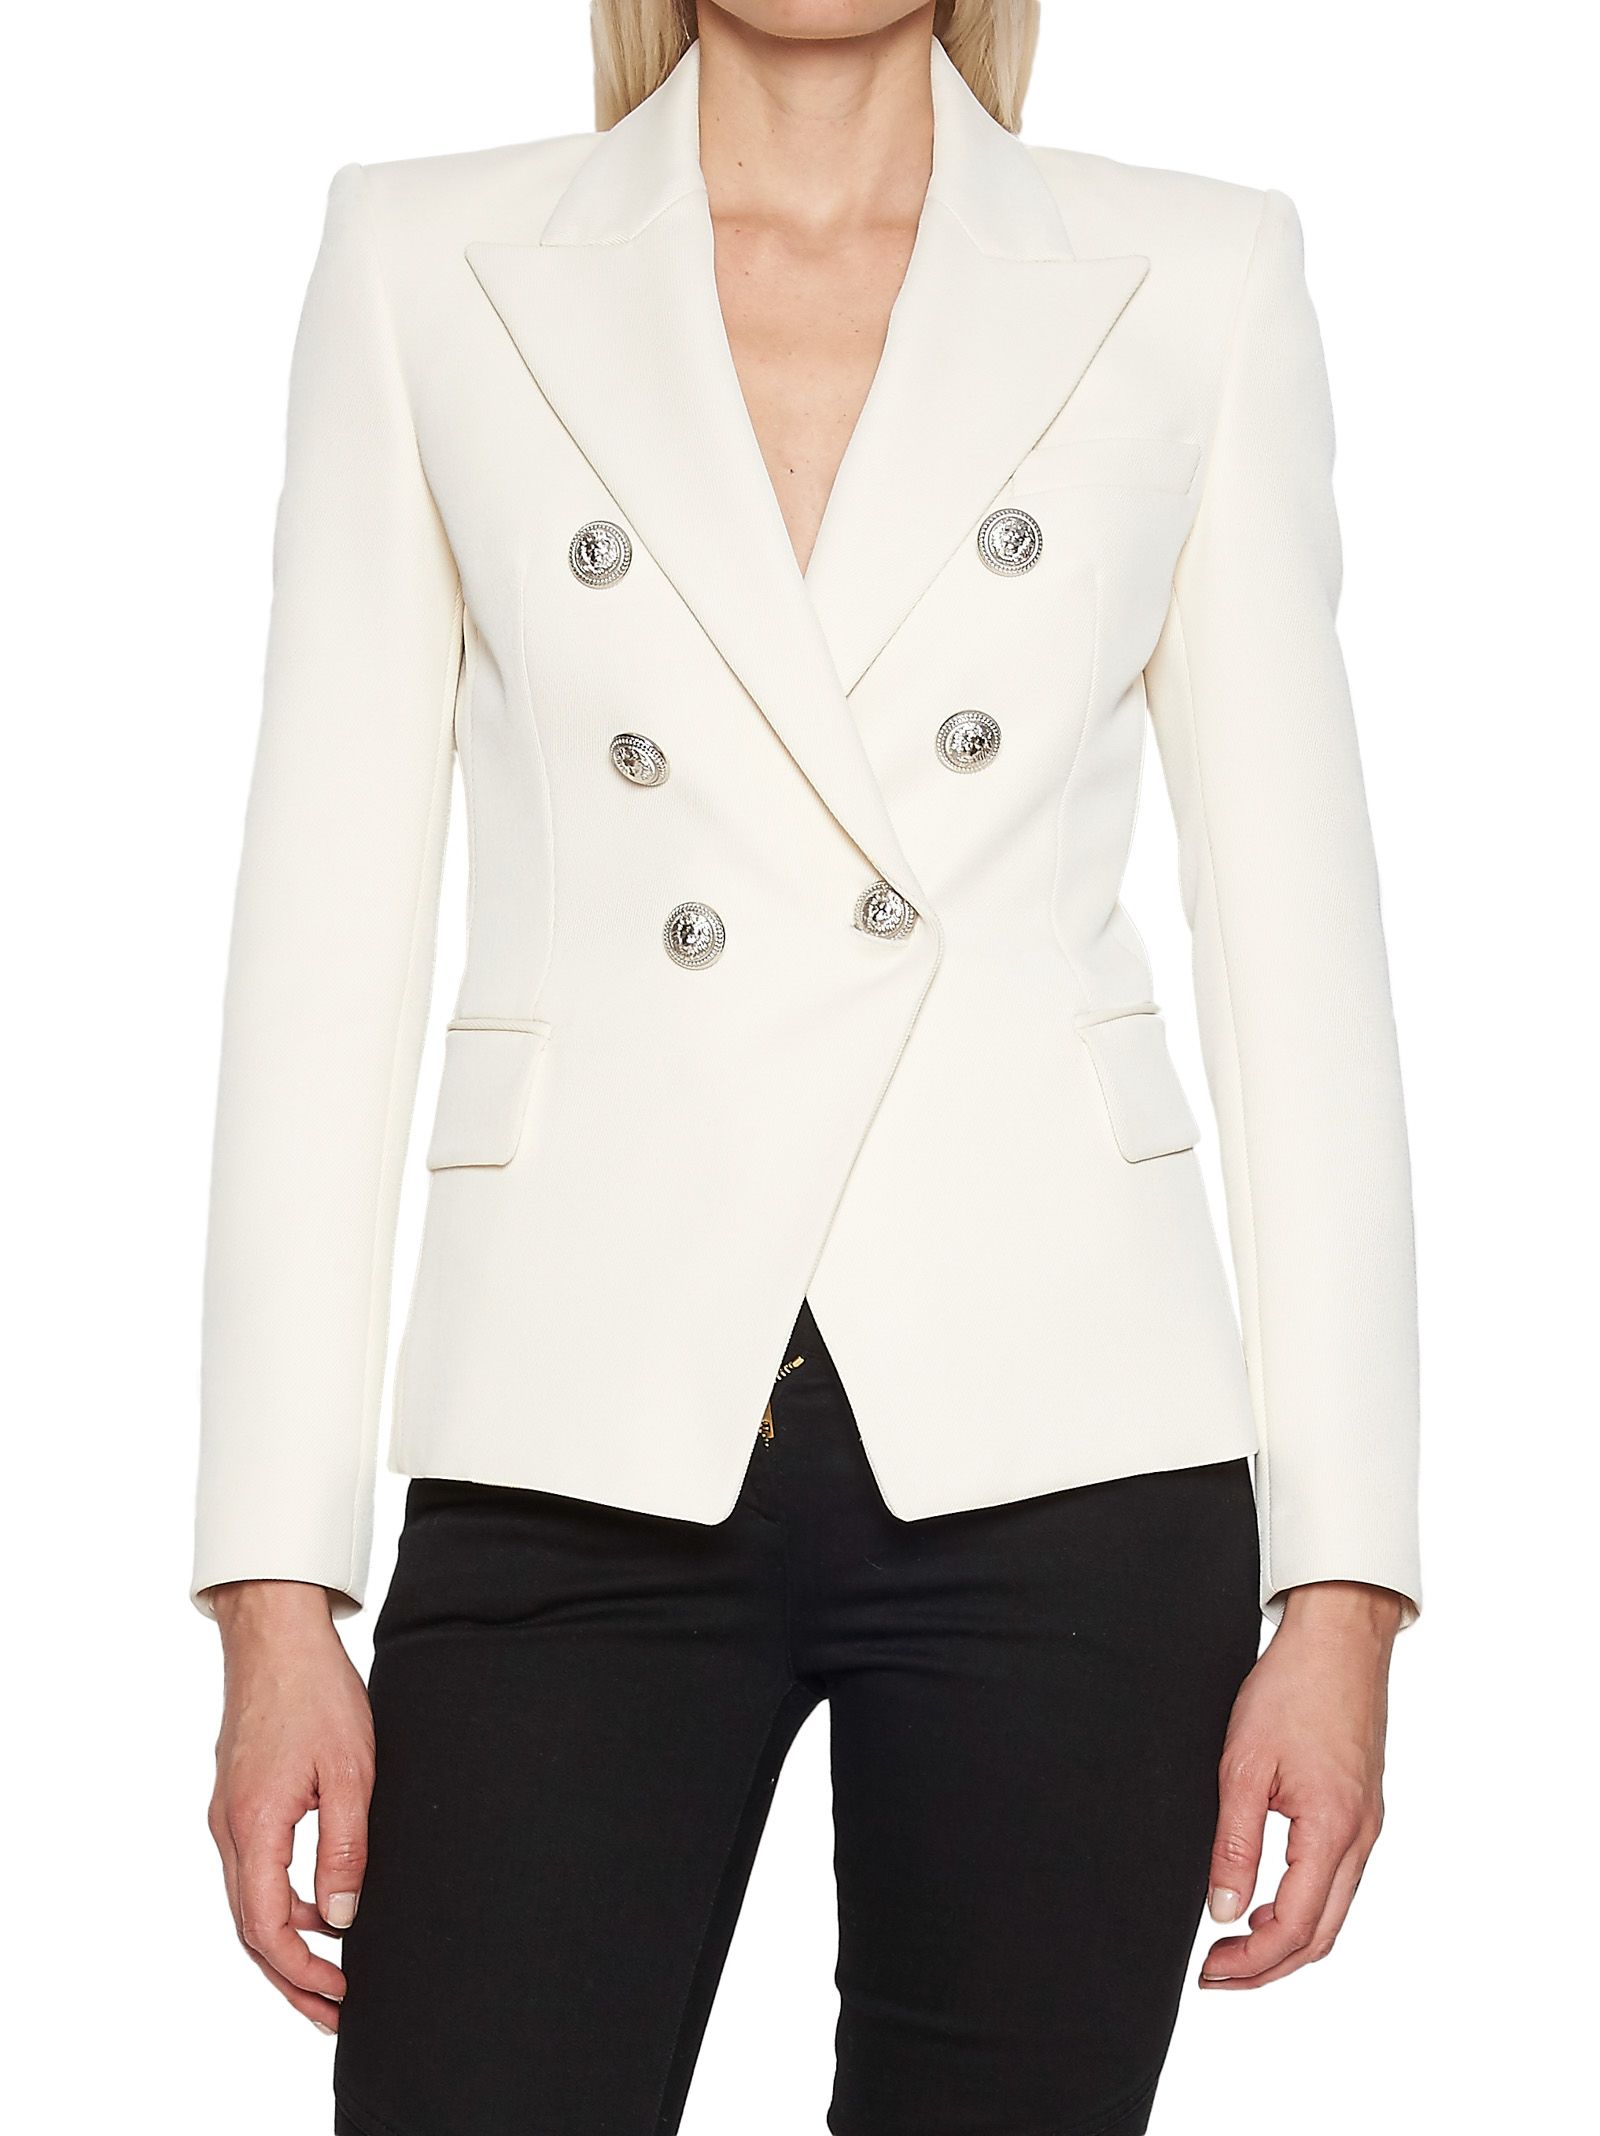 Balmain - Balmain Jacket - White, Women's Jackets | Italist